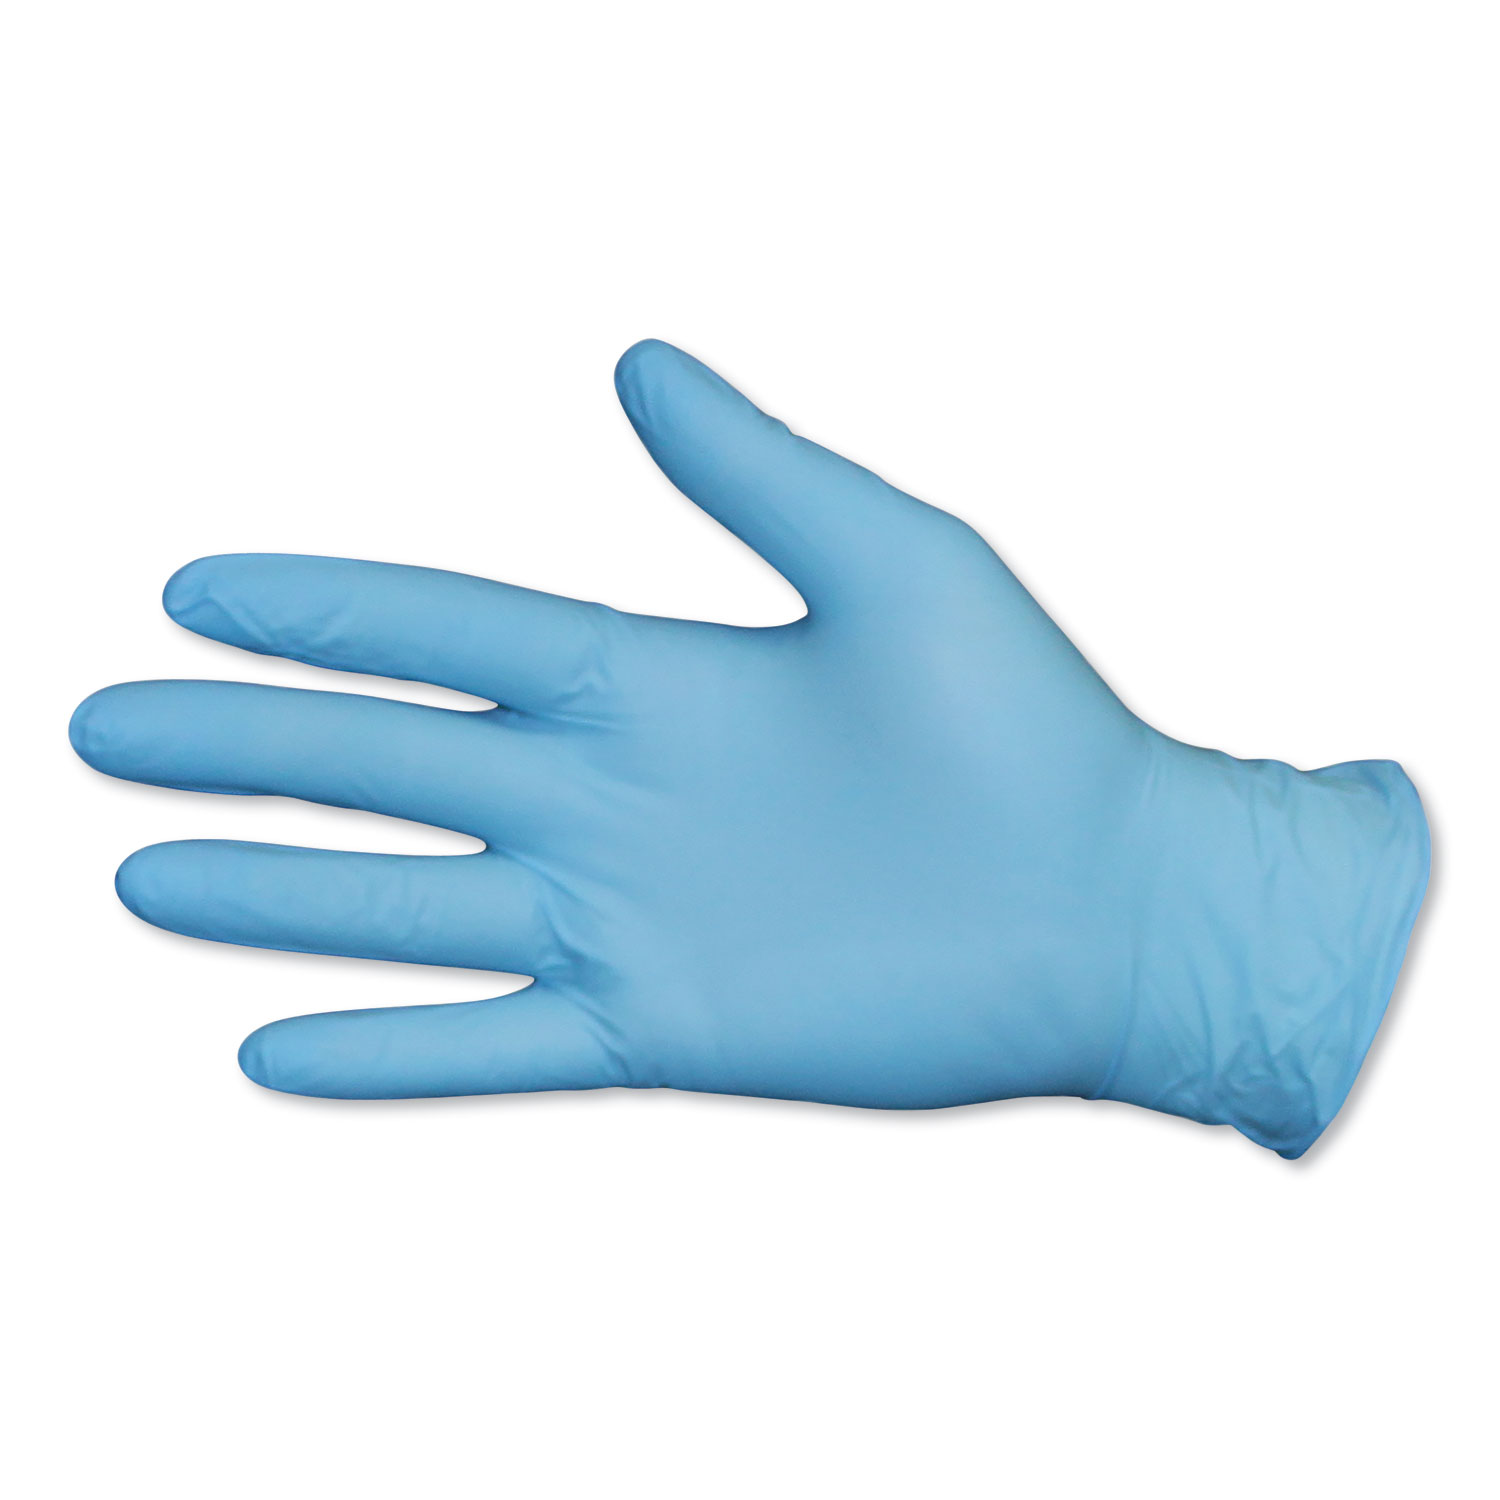  Impact 8644L Pro-Guard Disposable Powder-Free General-Purpose Nitrile Gloves, Blue, Large, 100/Box (IMP8644LBX) 